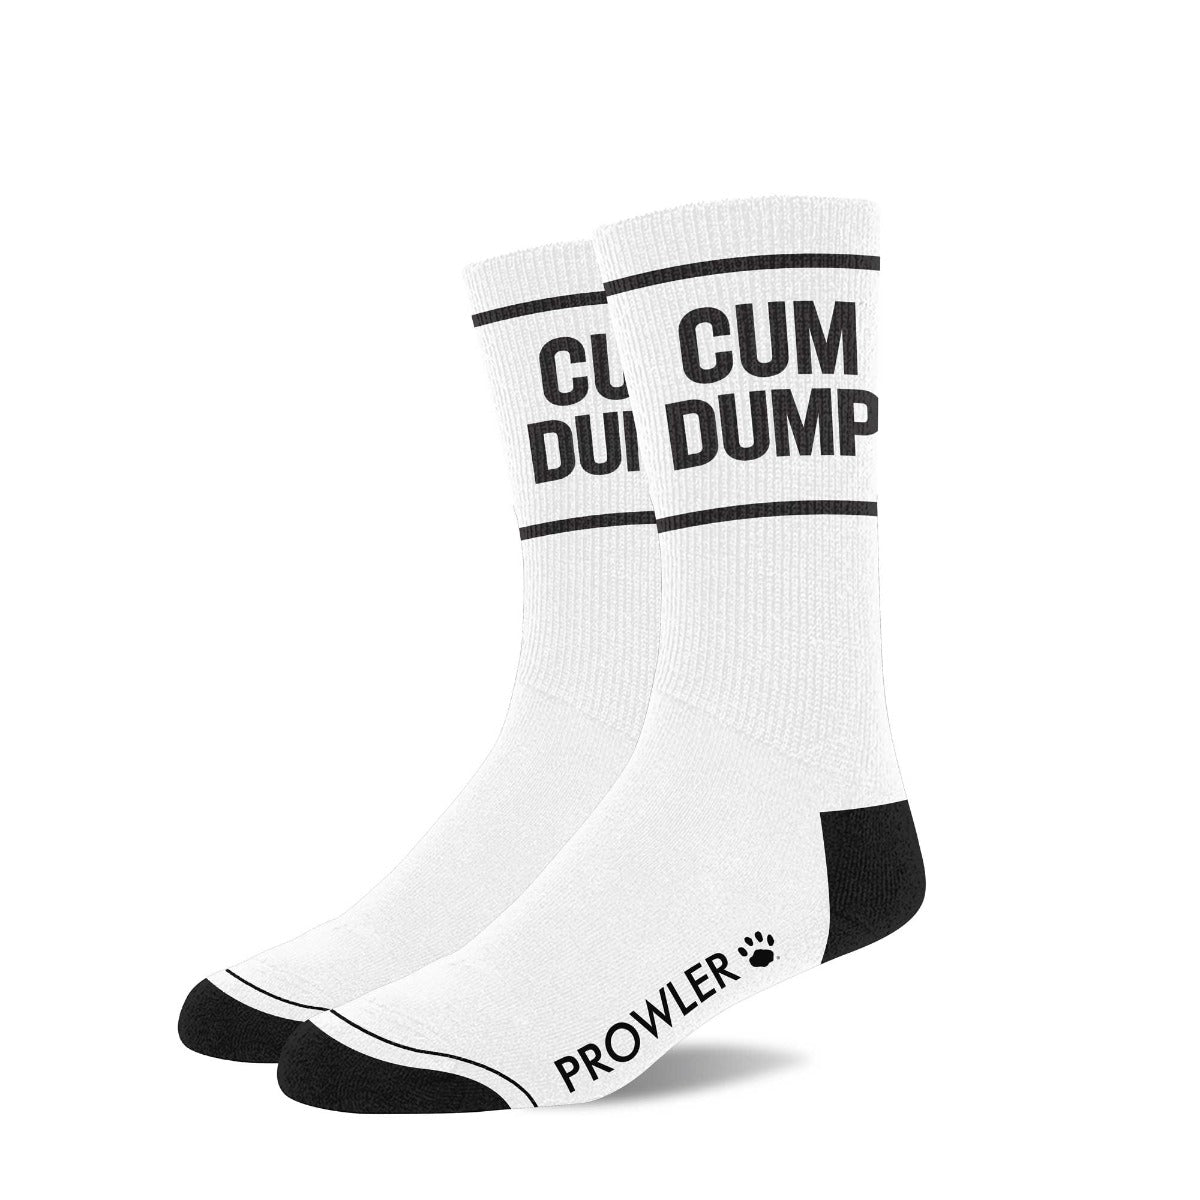 Prowler RED Cum Dump Socks (7960080810223)